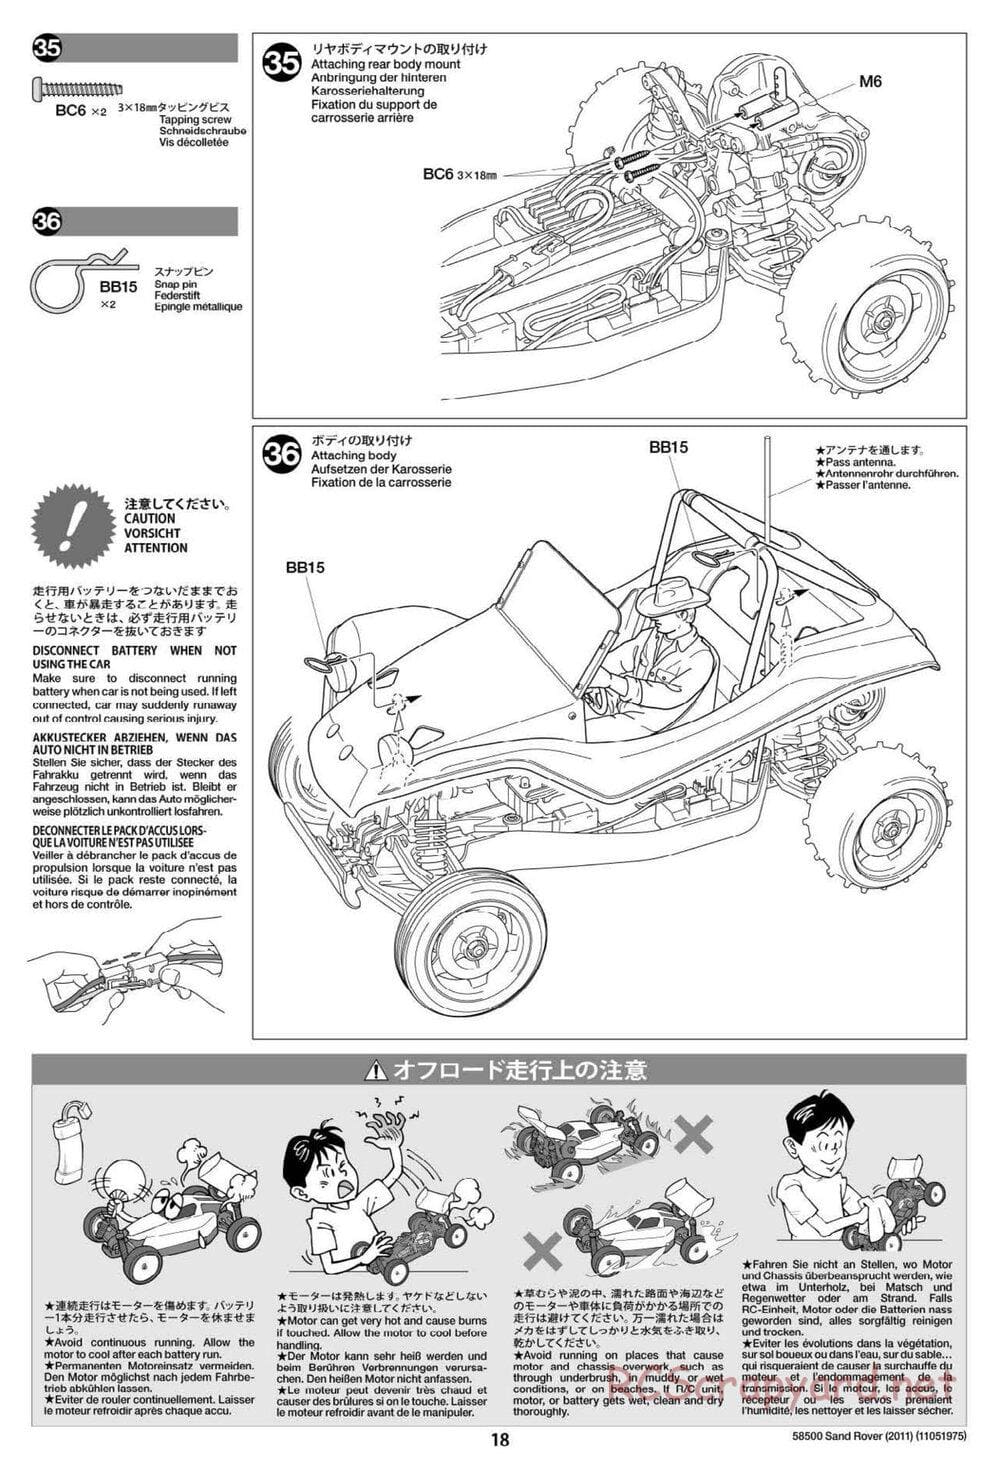 Tamiya - Sand Rover 2011 Chassis - Manual - Page 18